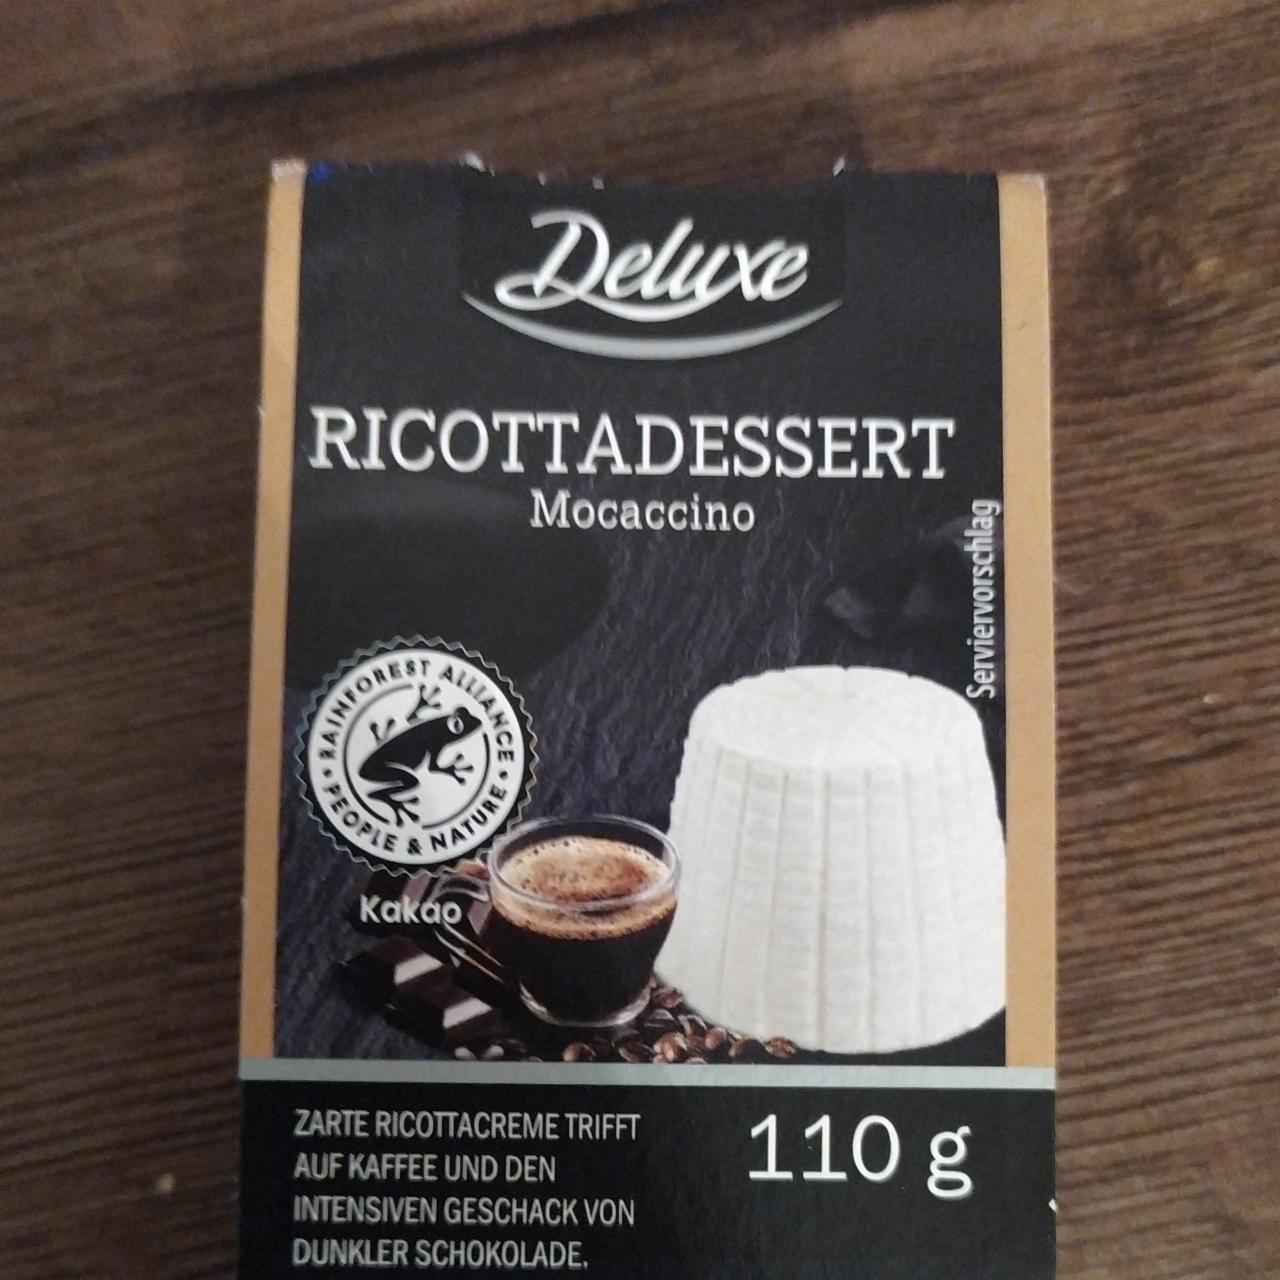 Фото - Ricotta-Dessert Mocaccino Deluxe